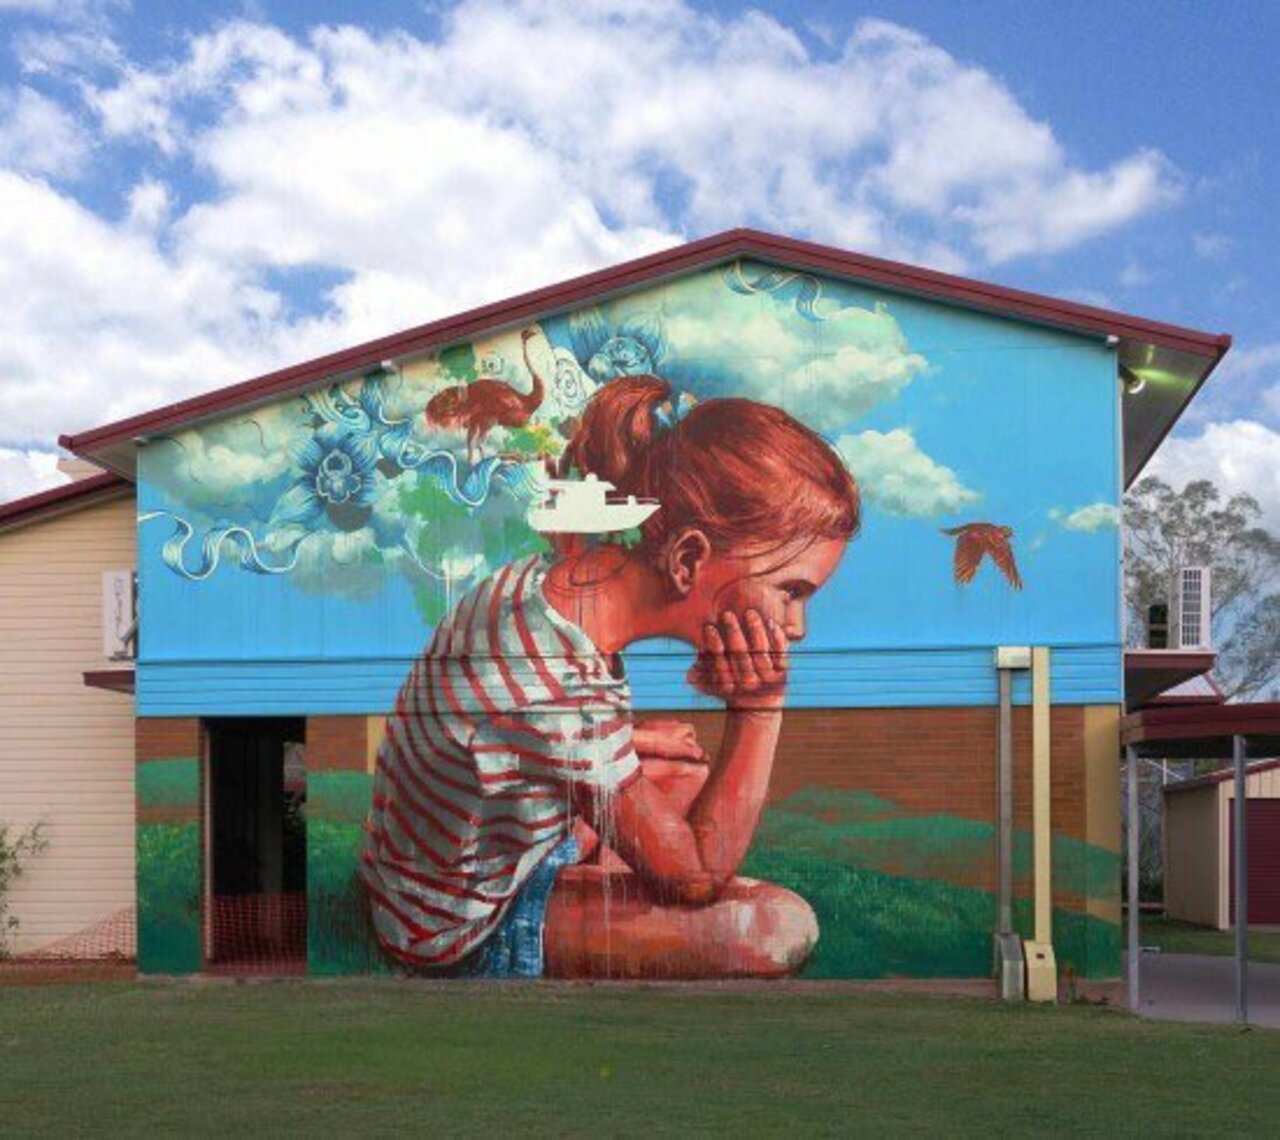 #Mural by Fintan Magee #Rockhampton #Australia #art #graffiti #streetart #urbanart https://t.co/DVYXdjoGMB